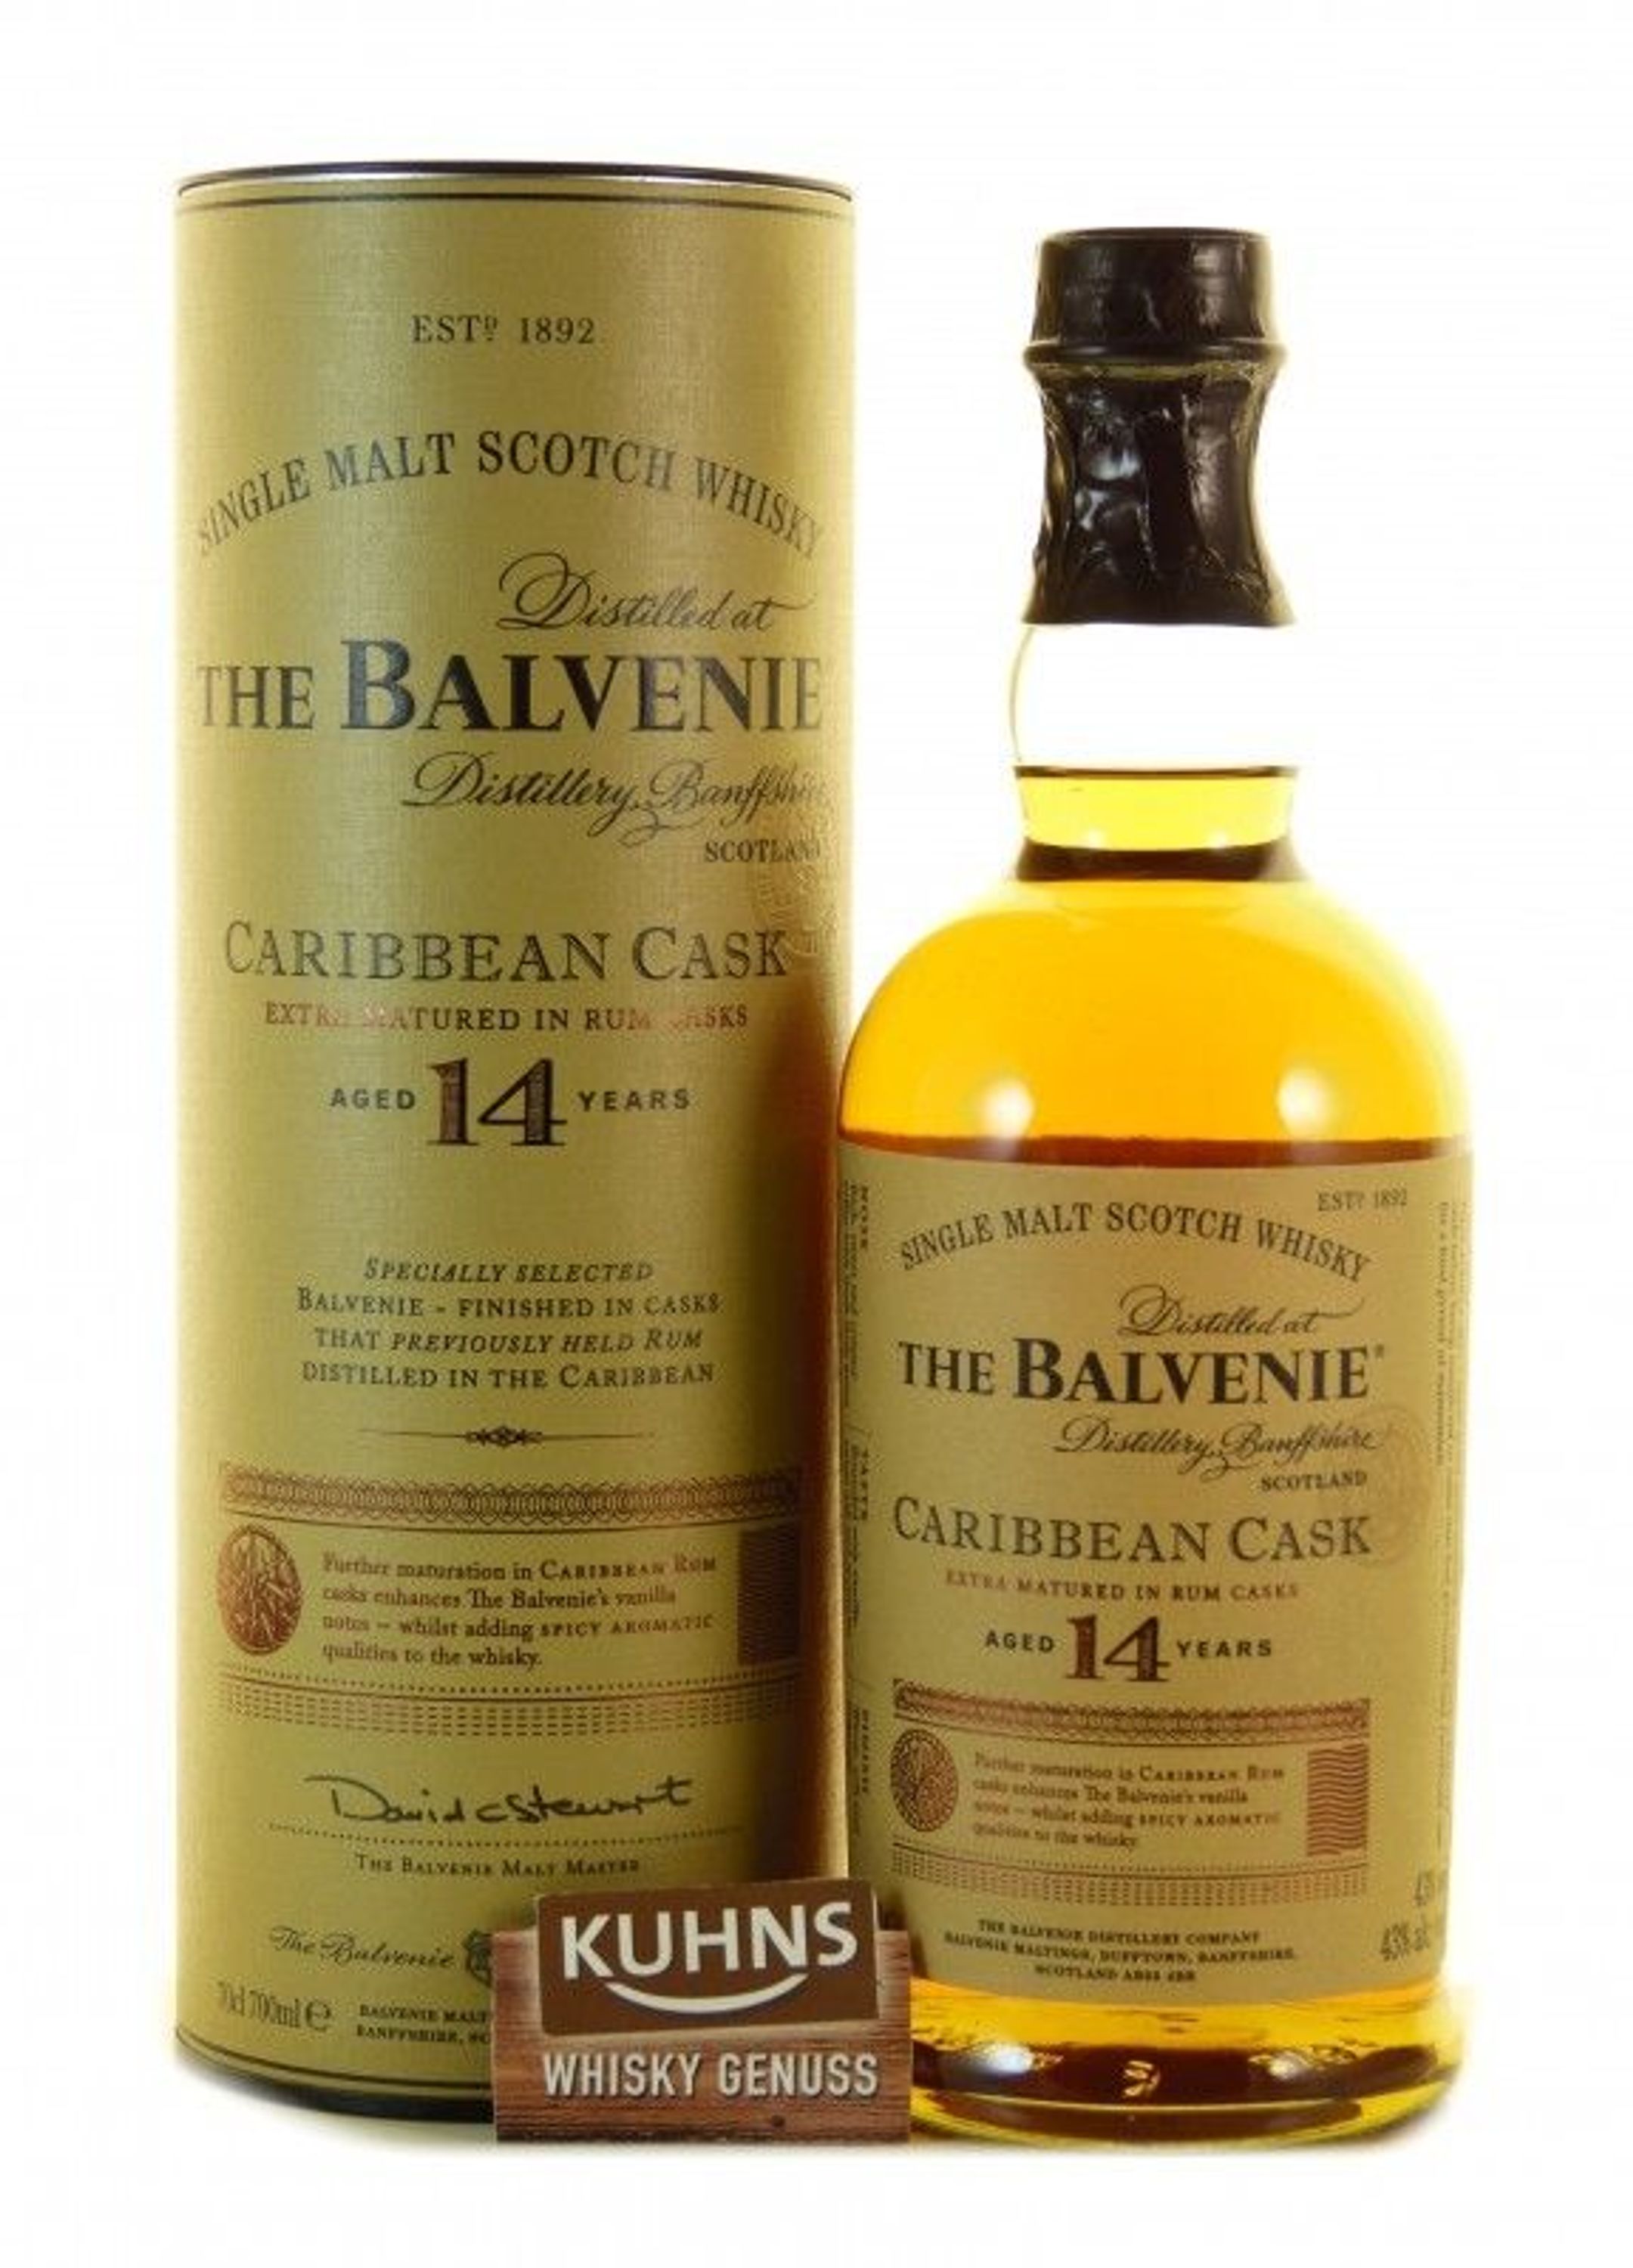 Balvenie 14 Years Caribbean Cask Speyside Single Malt Scotch Whisky 0,7l, 43% Vol.